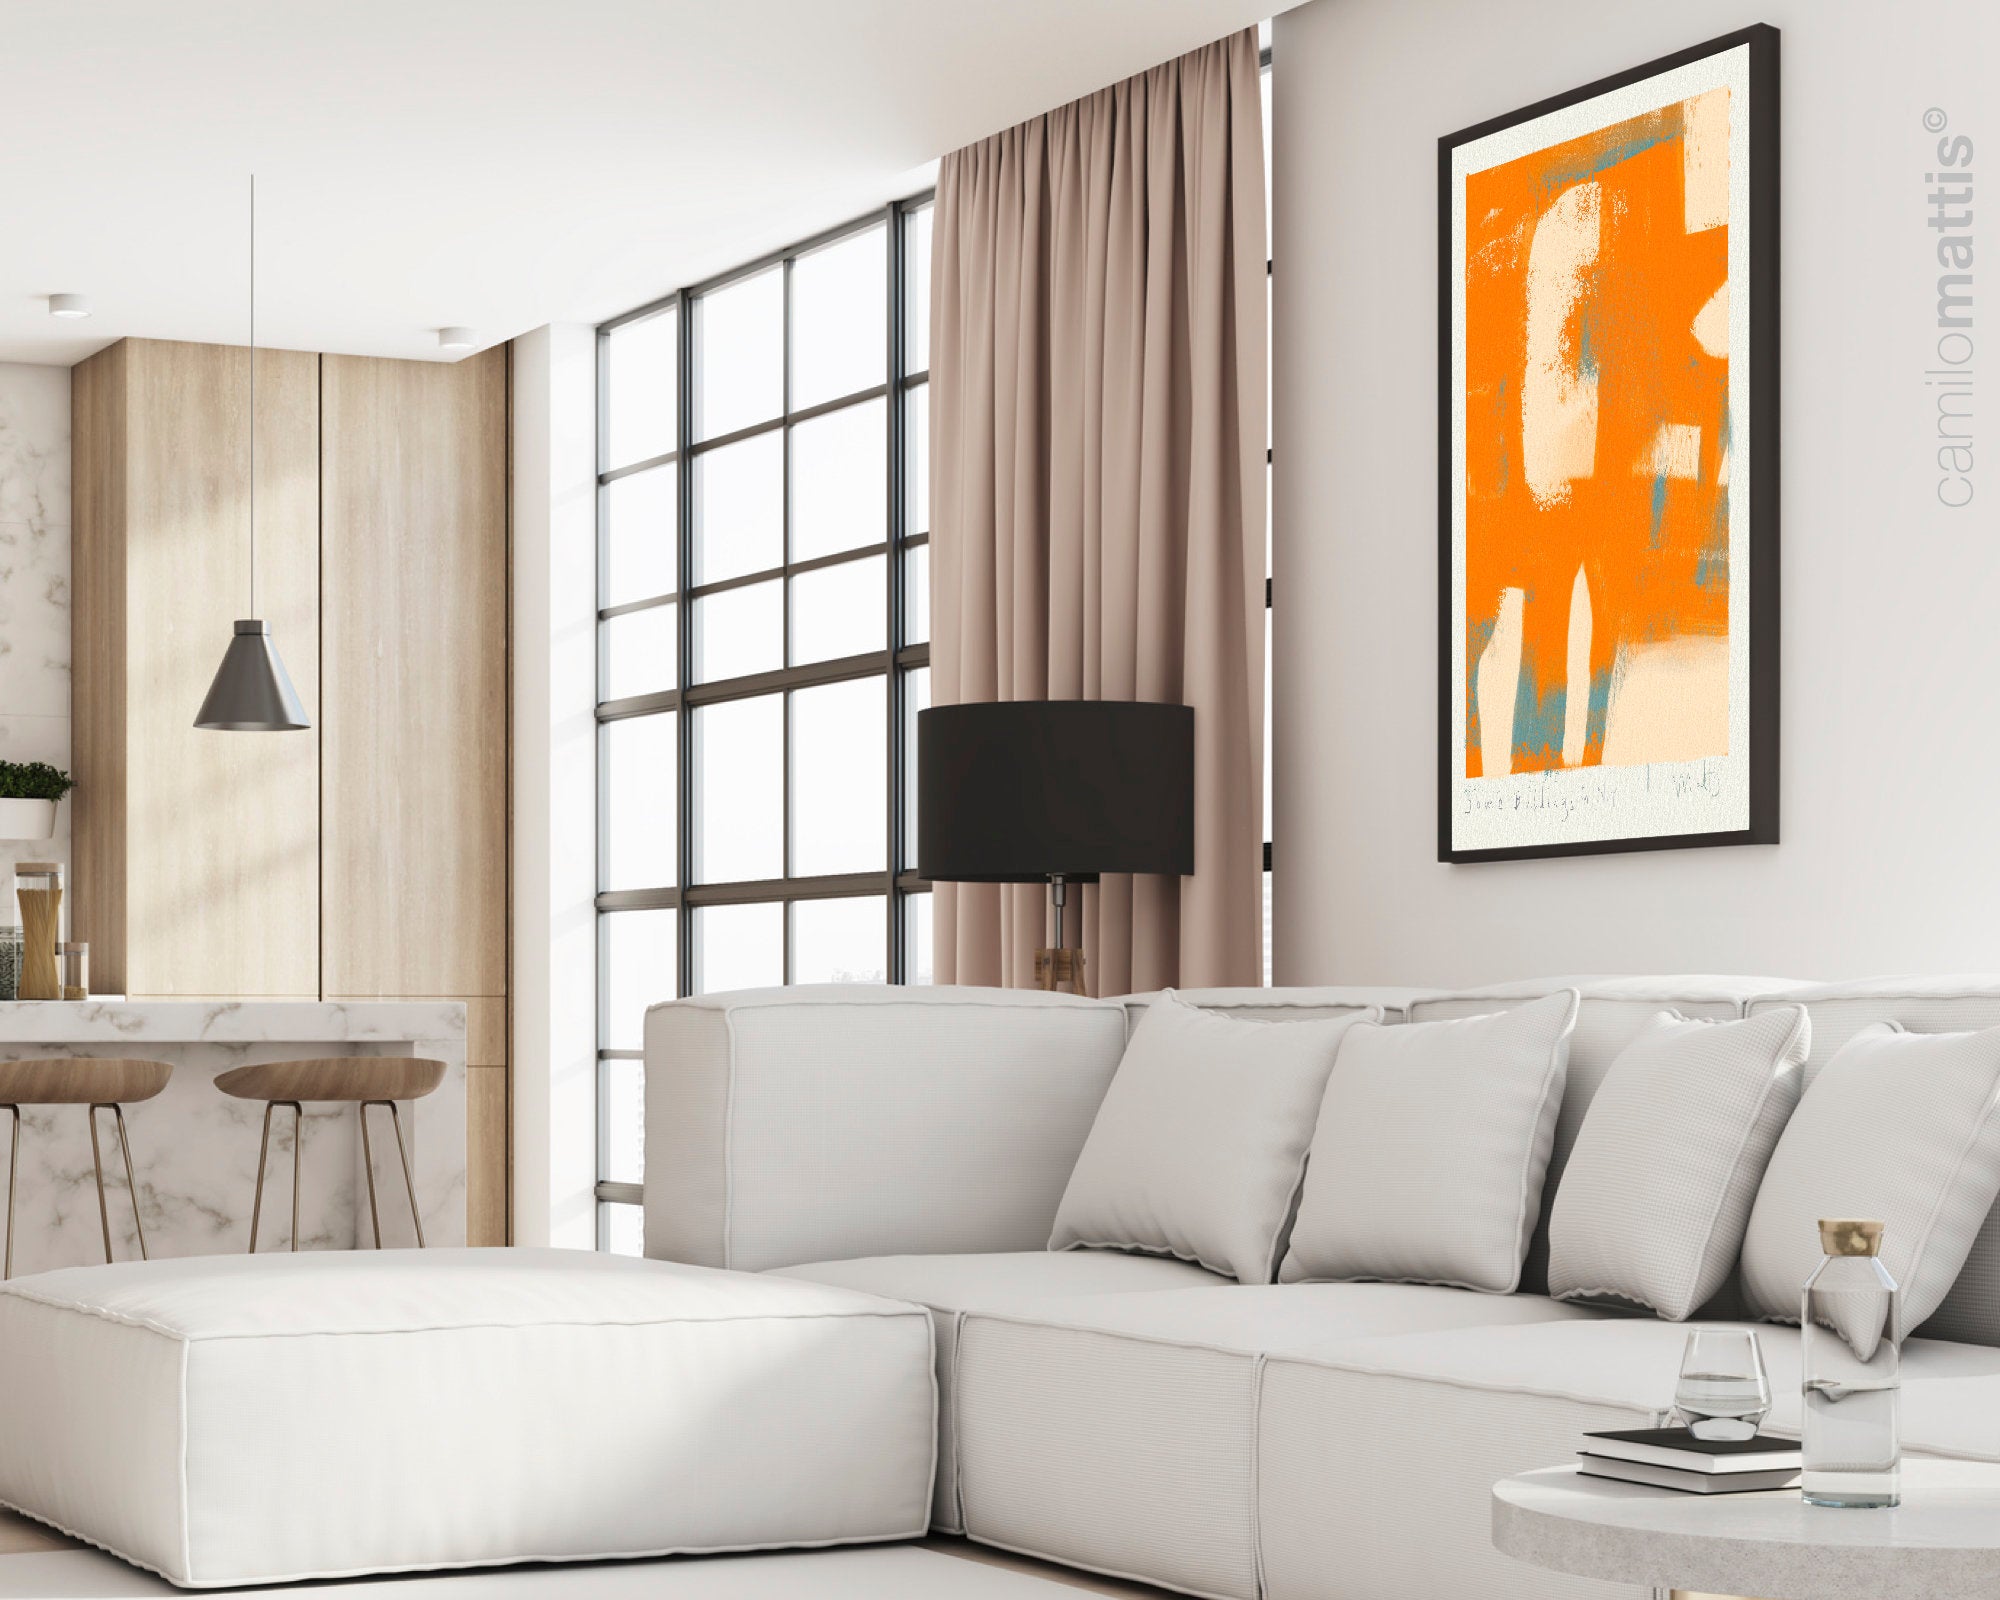 Bright orange abstract poster print art, Modern contemporary home apartment decor by Camilo Mattis